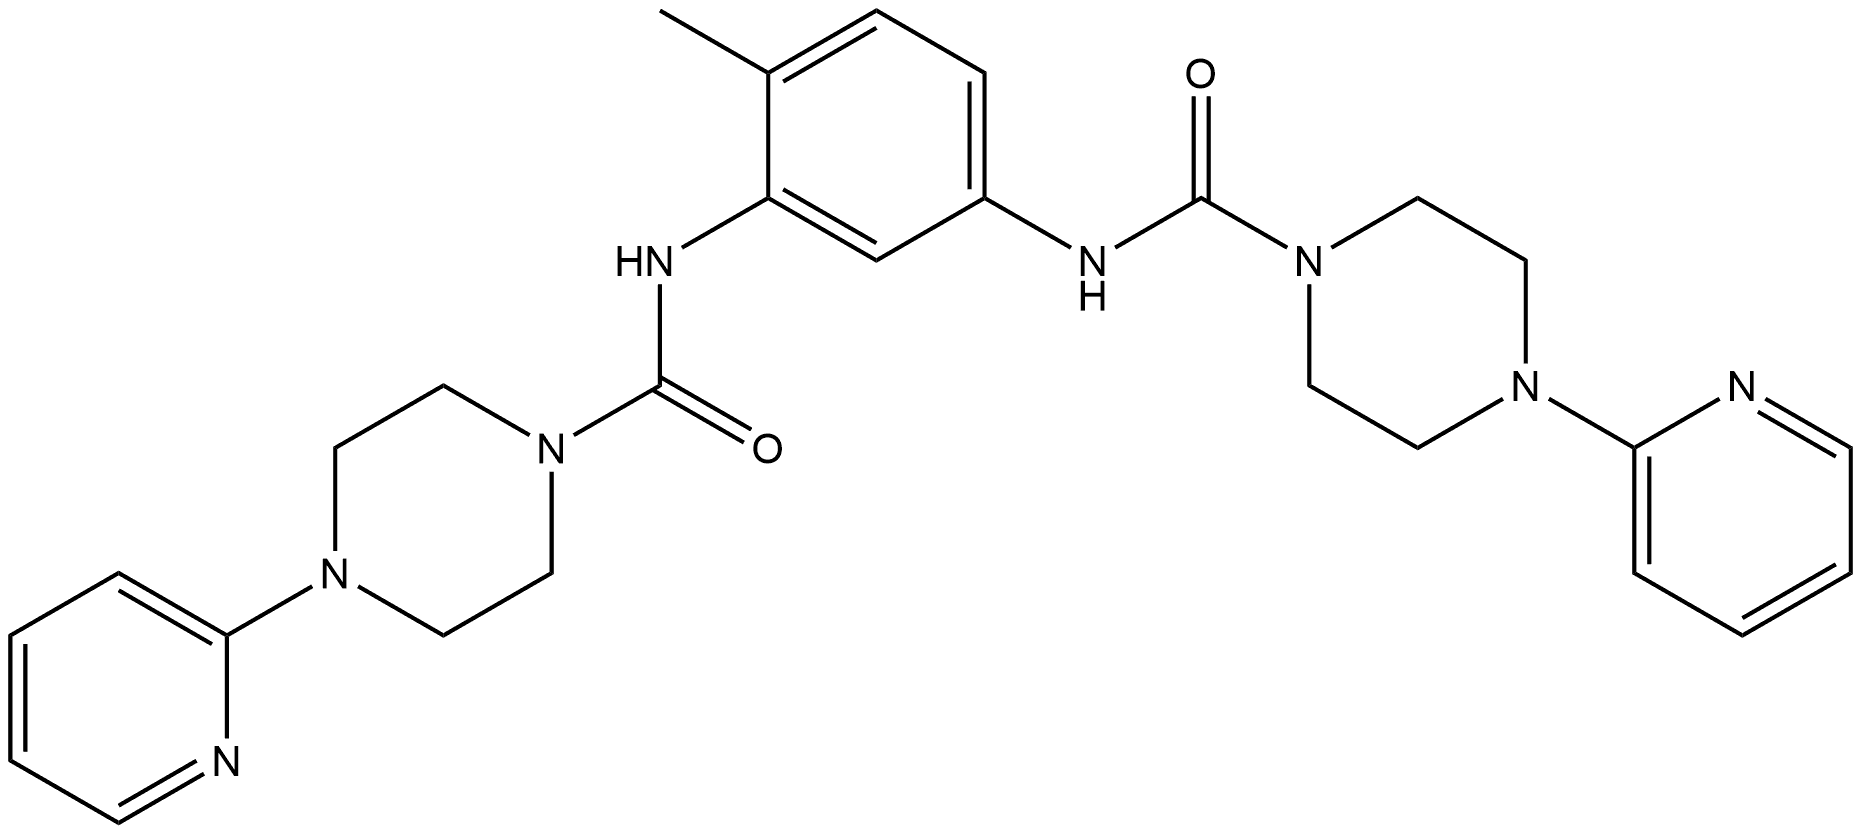 2,4-TDI DERIVATIVE|2,4-二异氰酸甲苯衍生物